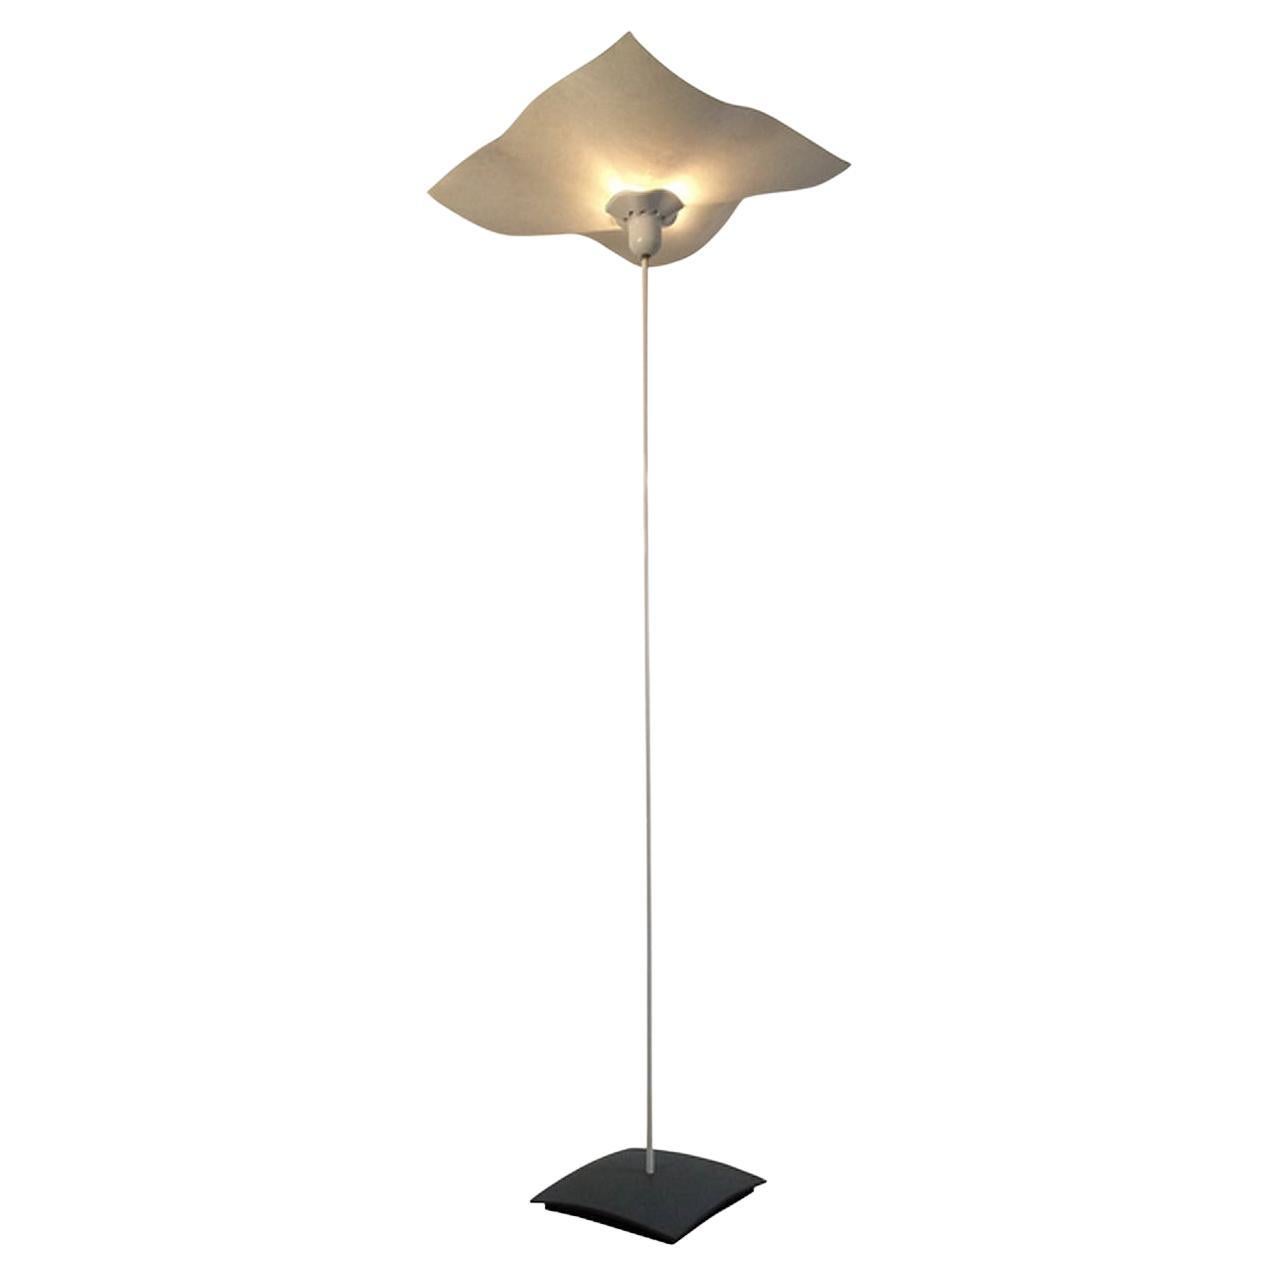 Floor lamp by Mario Bellini for Artemide, 1970s iconic Design